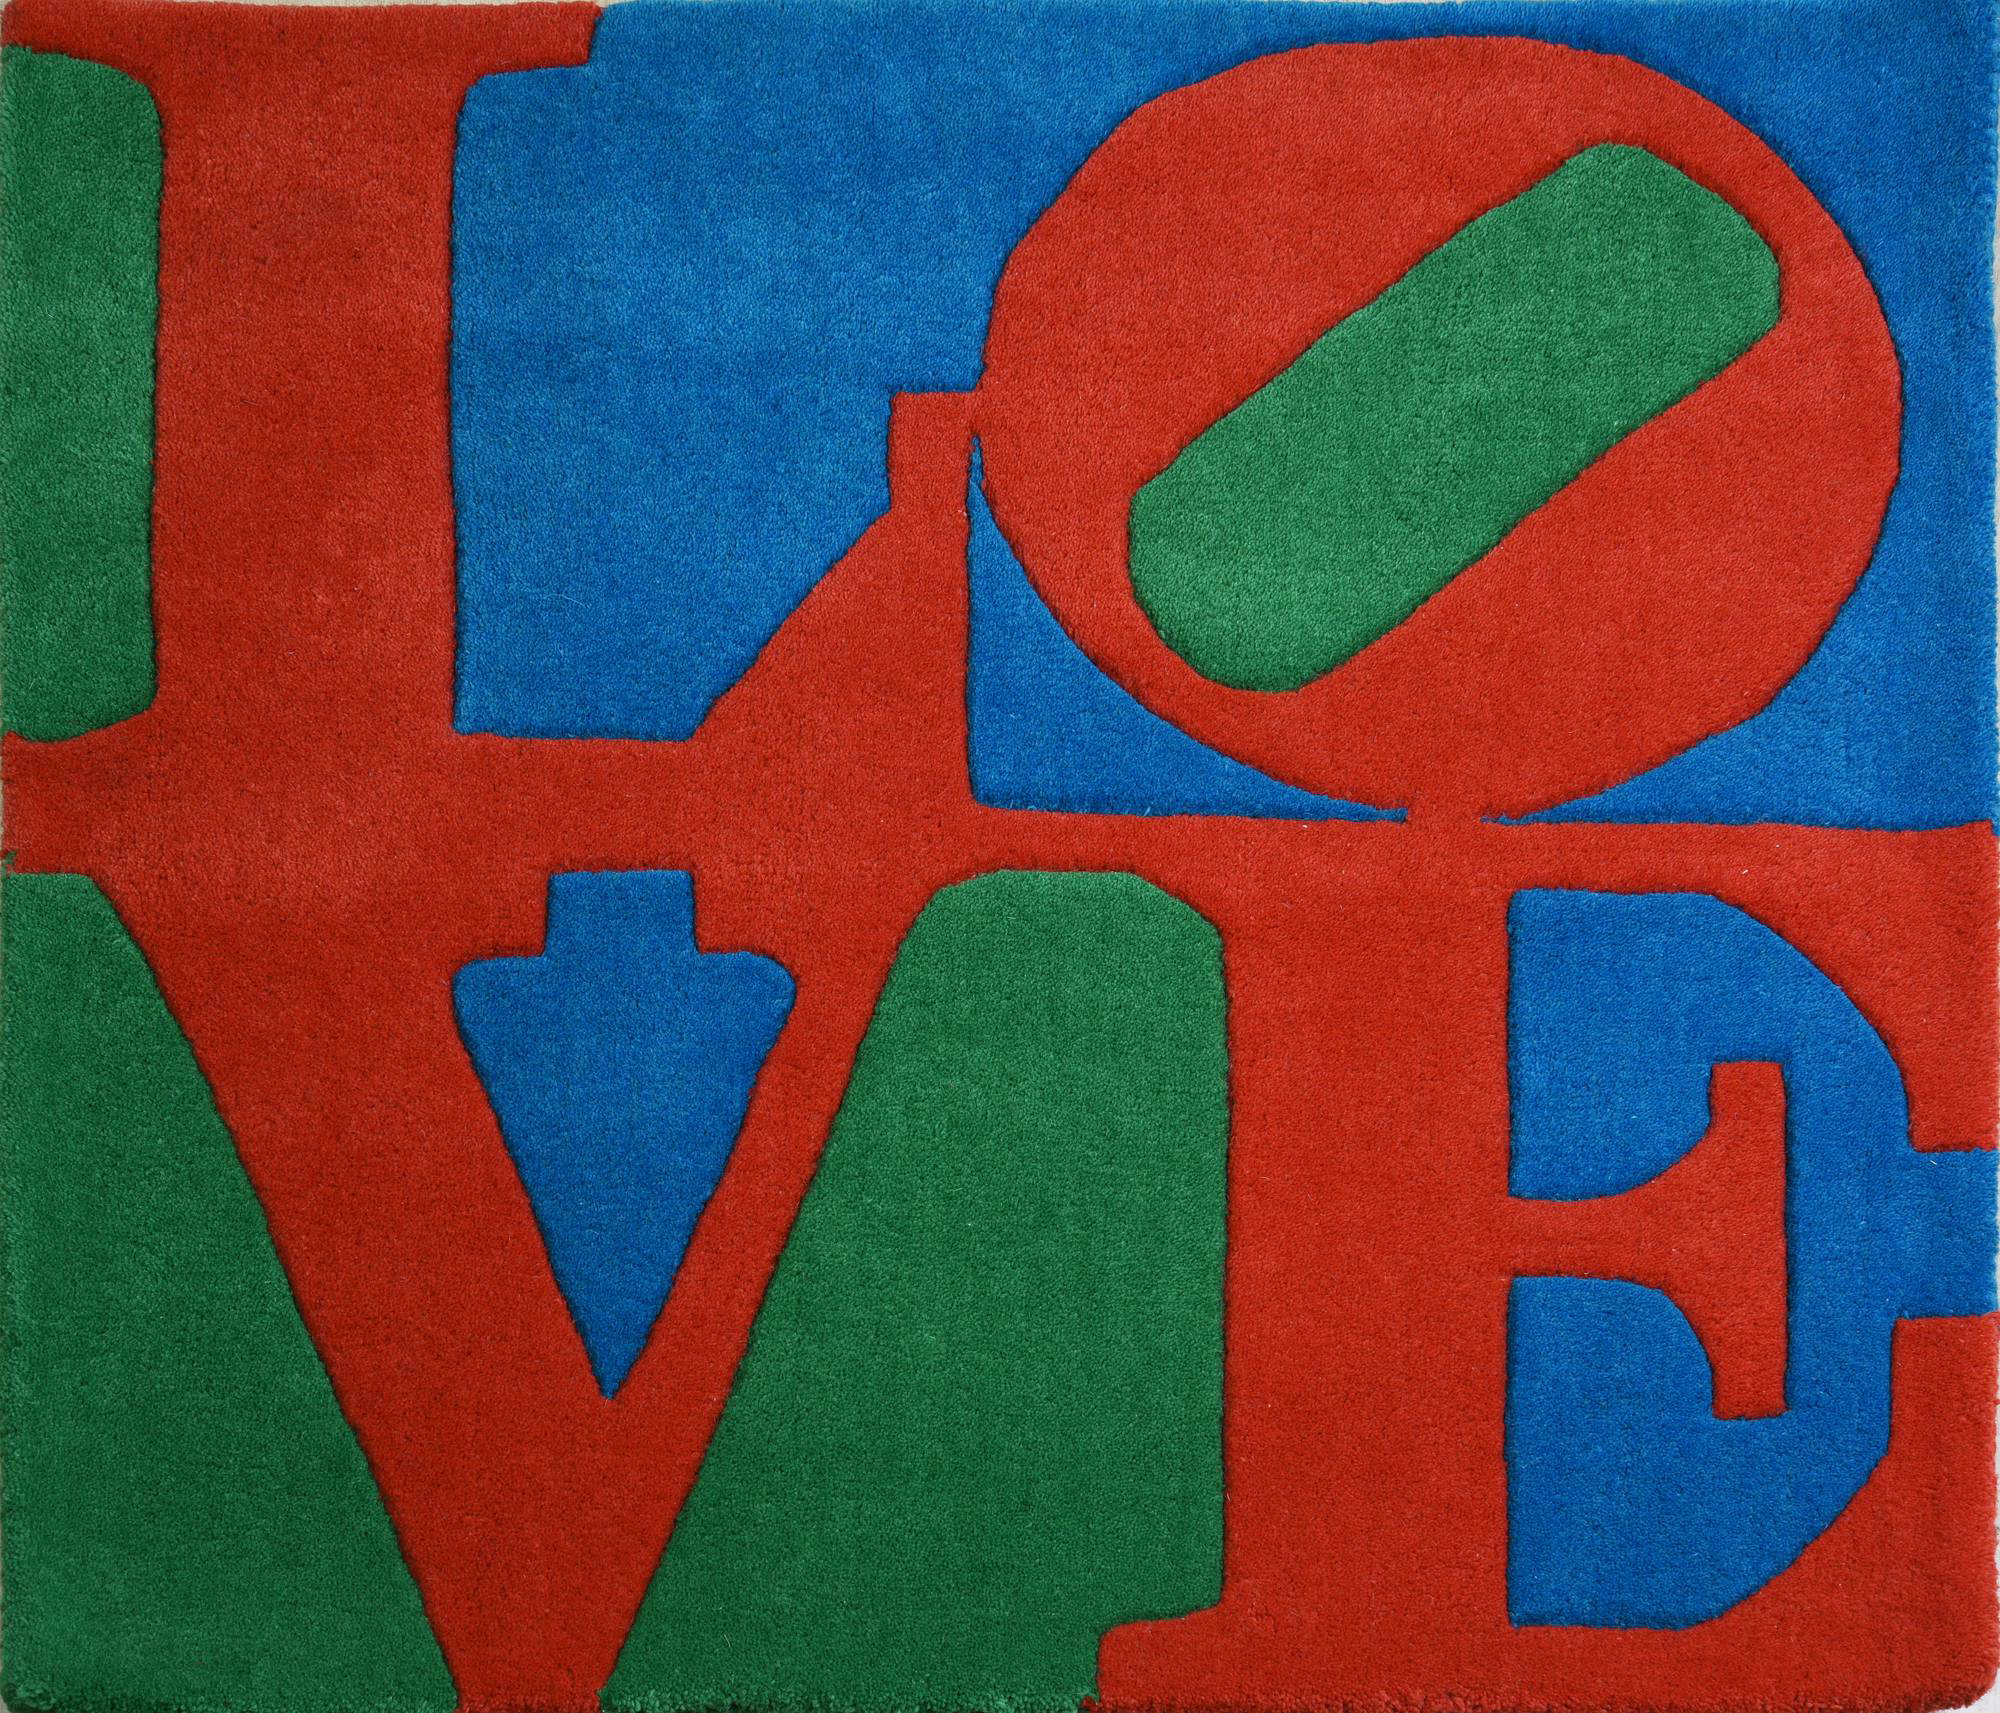 Robert Indiana LOVE RUG, 2007 tappeto, cm 74x74, es. 5.563/10.000 sul retro:...